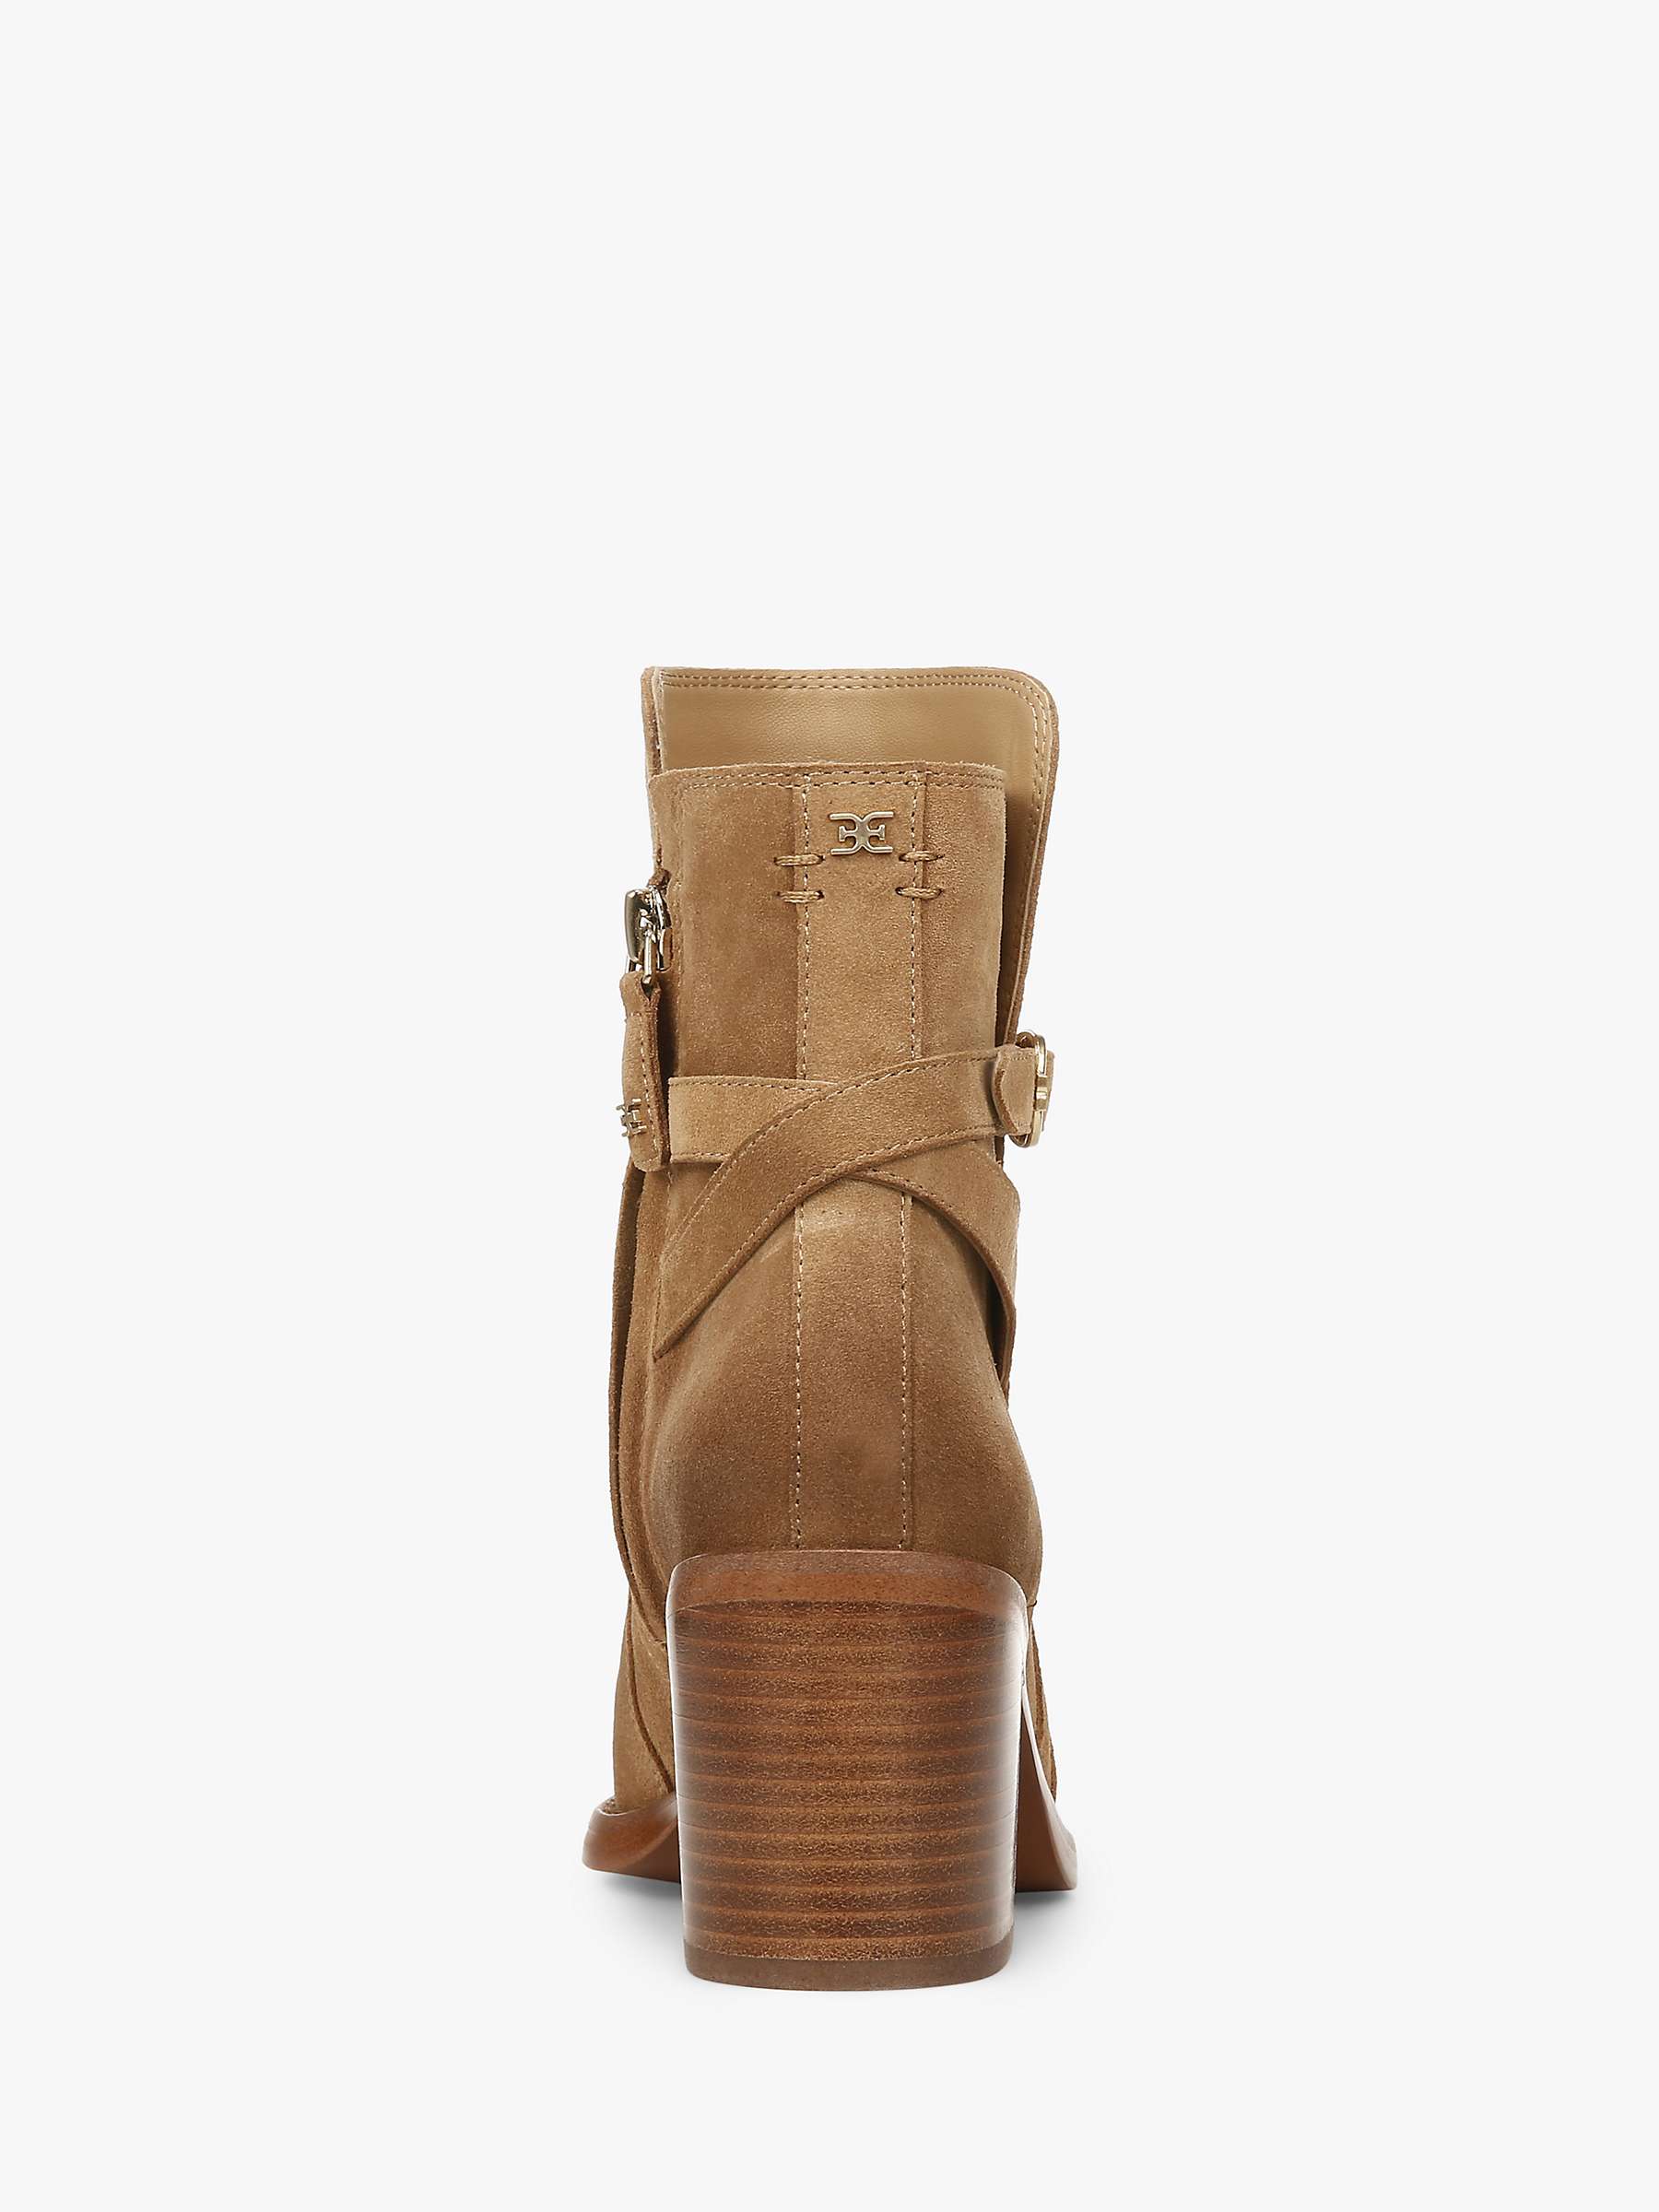 Buy Sam Edelman Simona Leather Ankle Boots, Golden Caramel Online at johnlewis.com